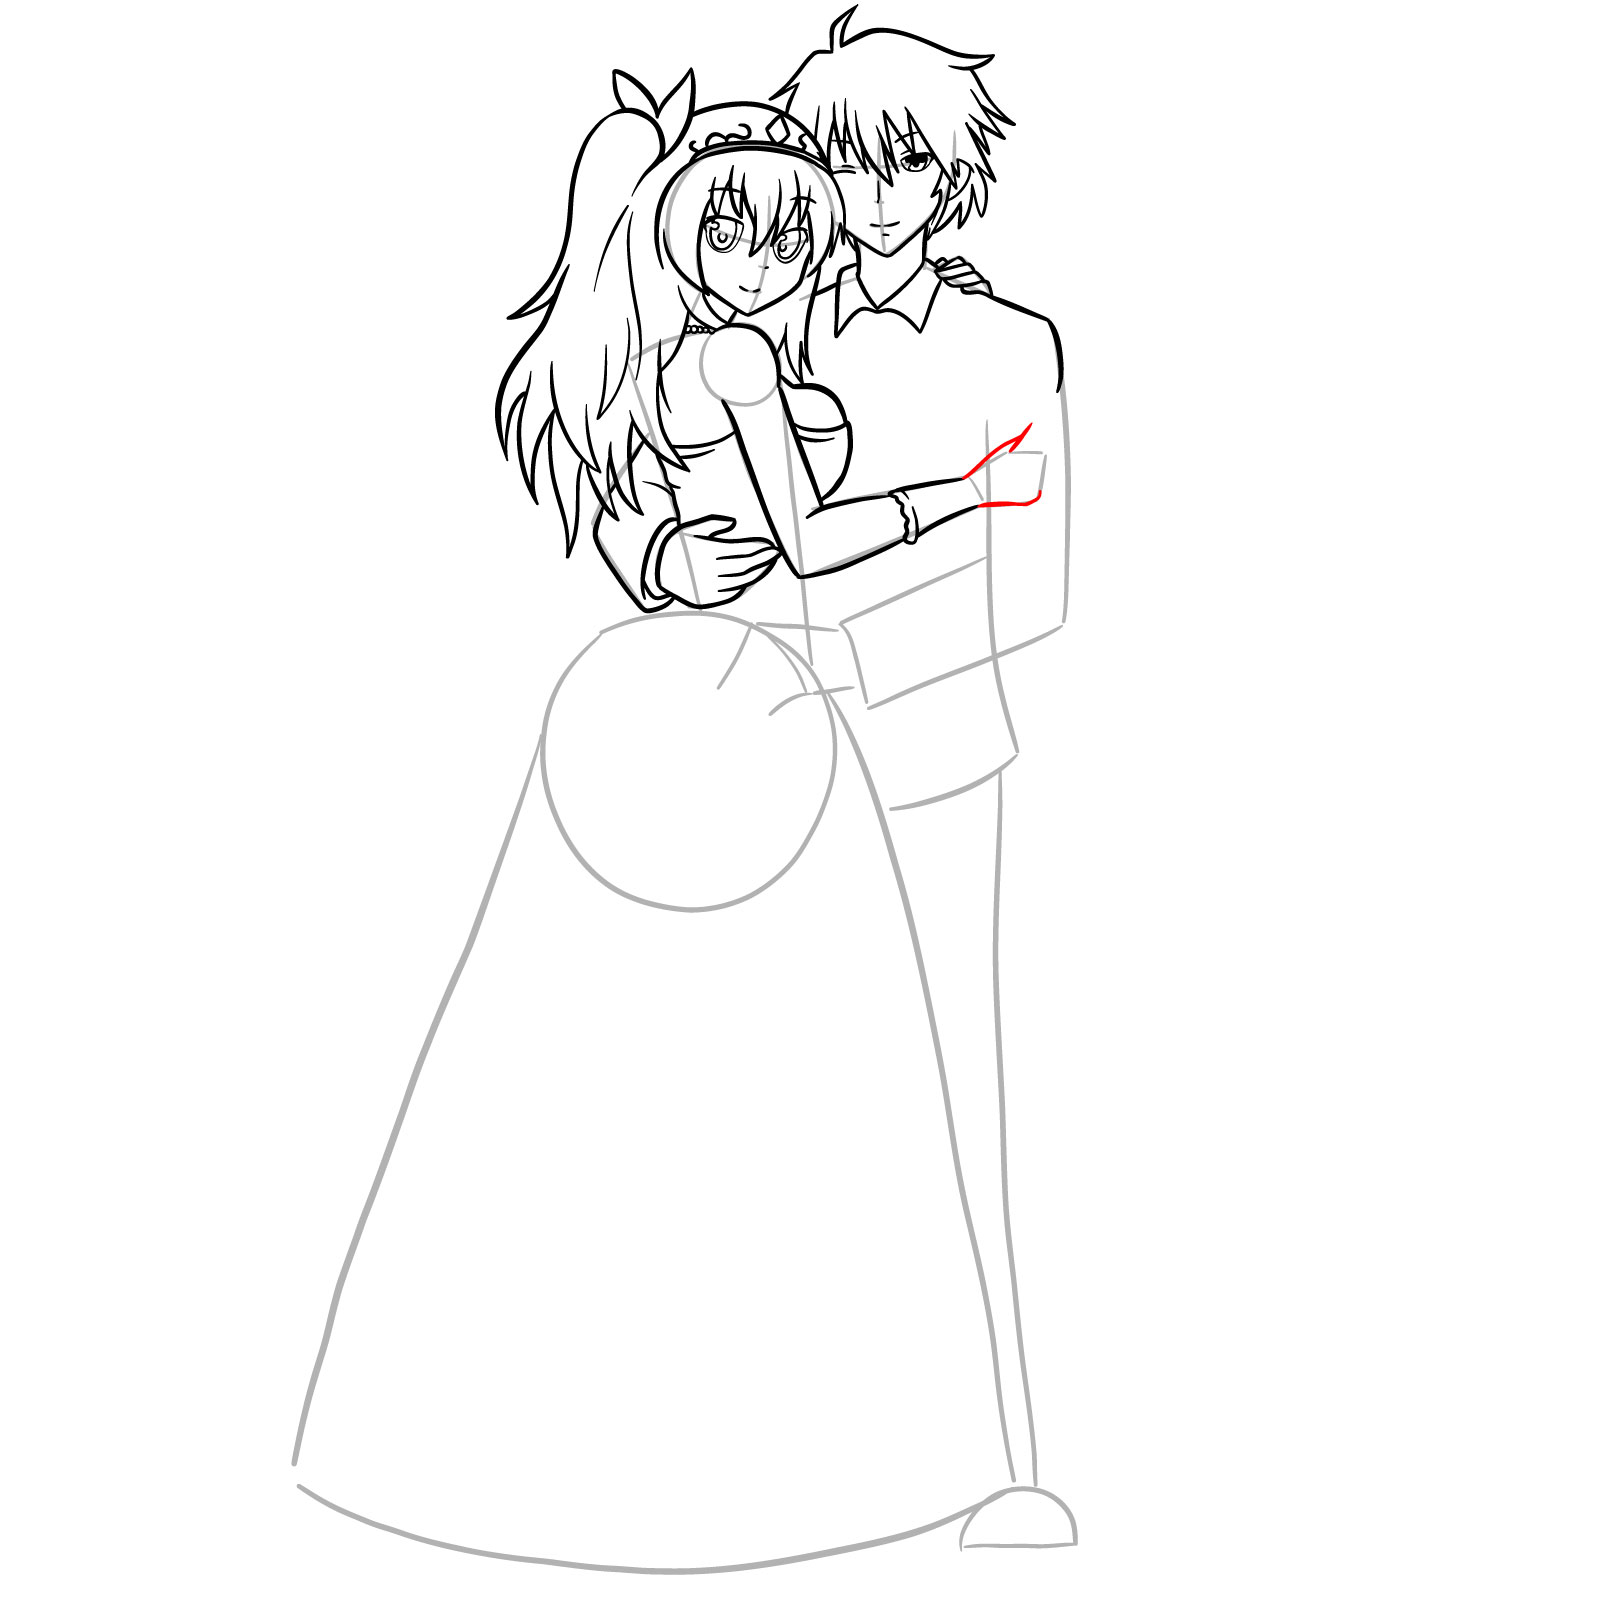 How to draw Ikki and Stella's wedding - step 38